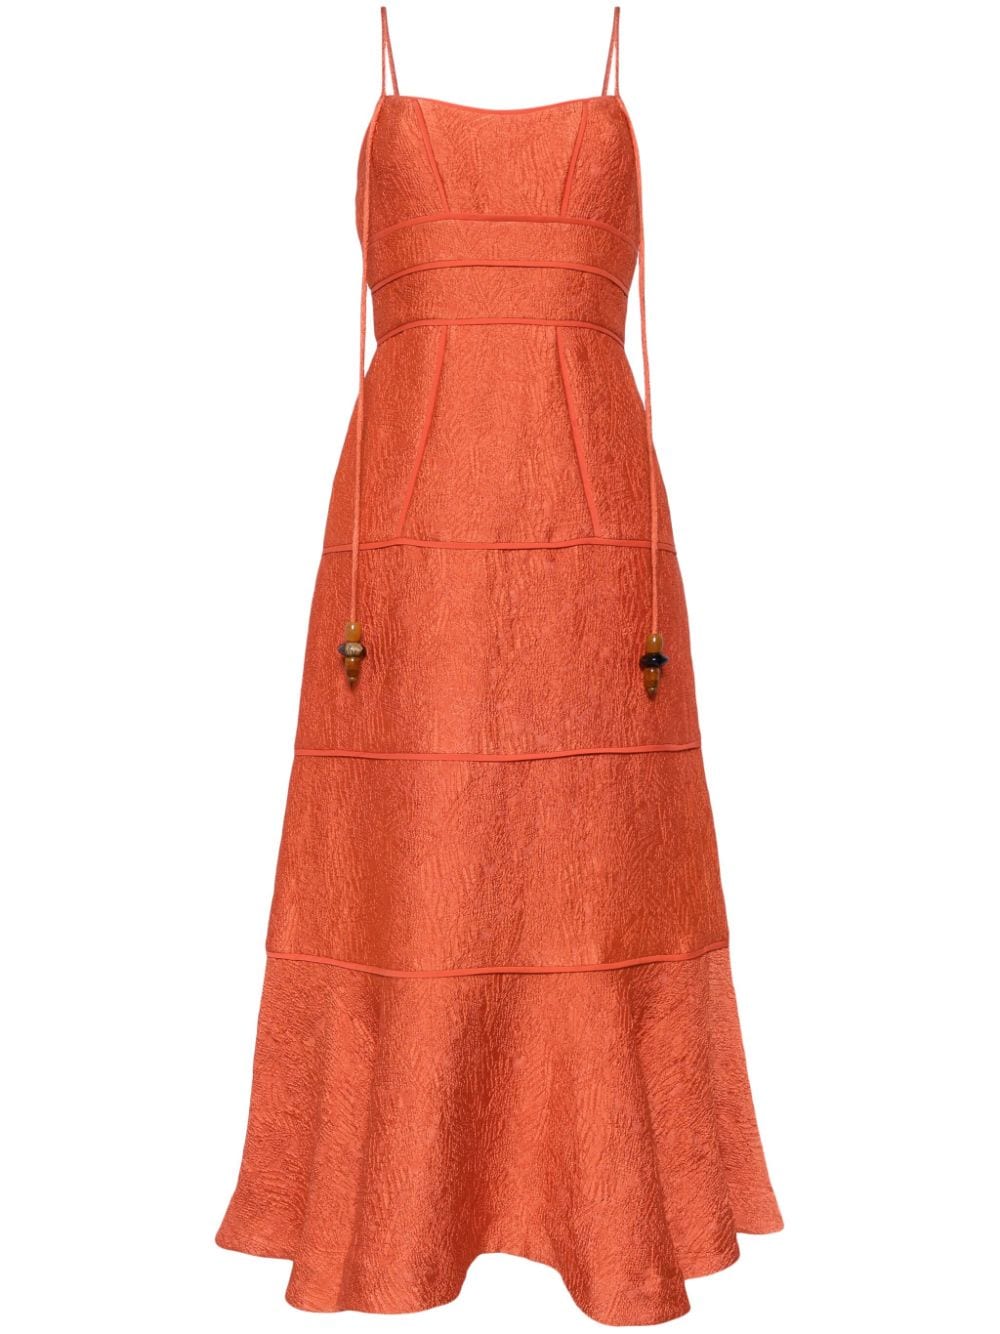 Vereda Dress in Terracotta